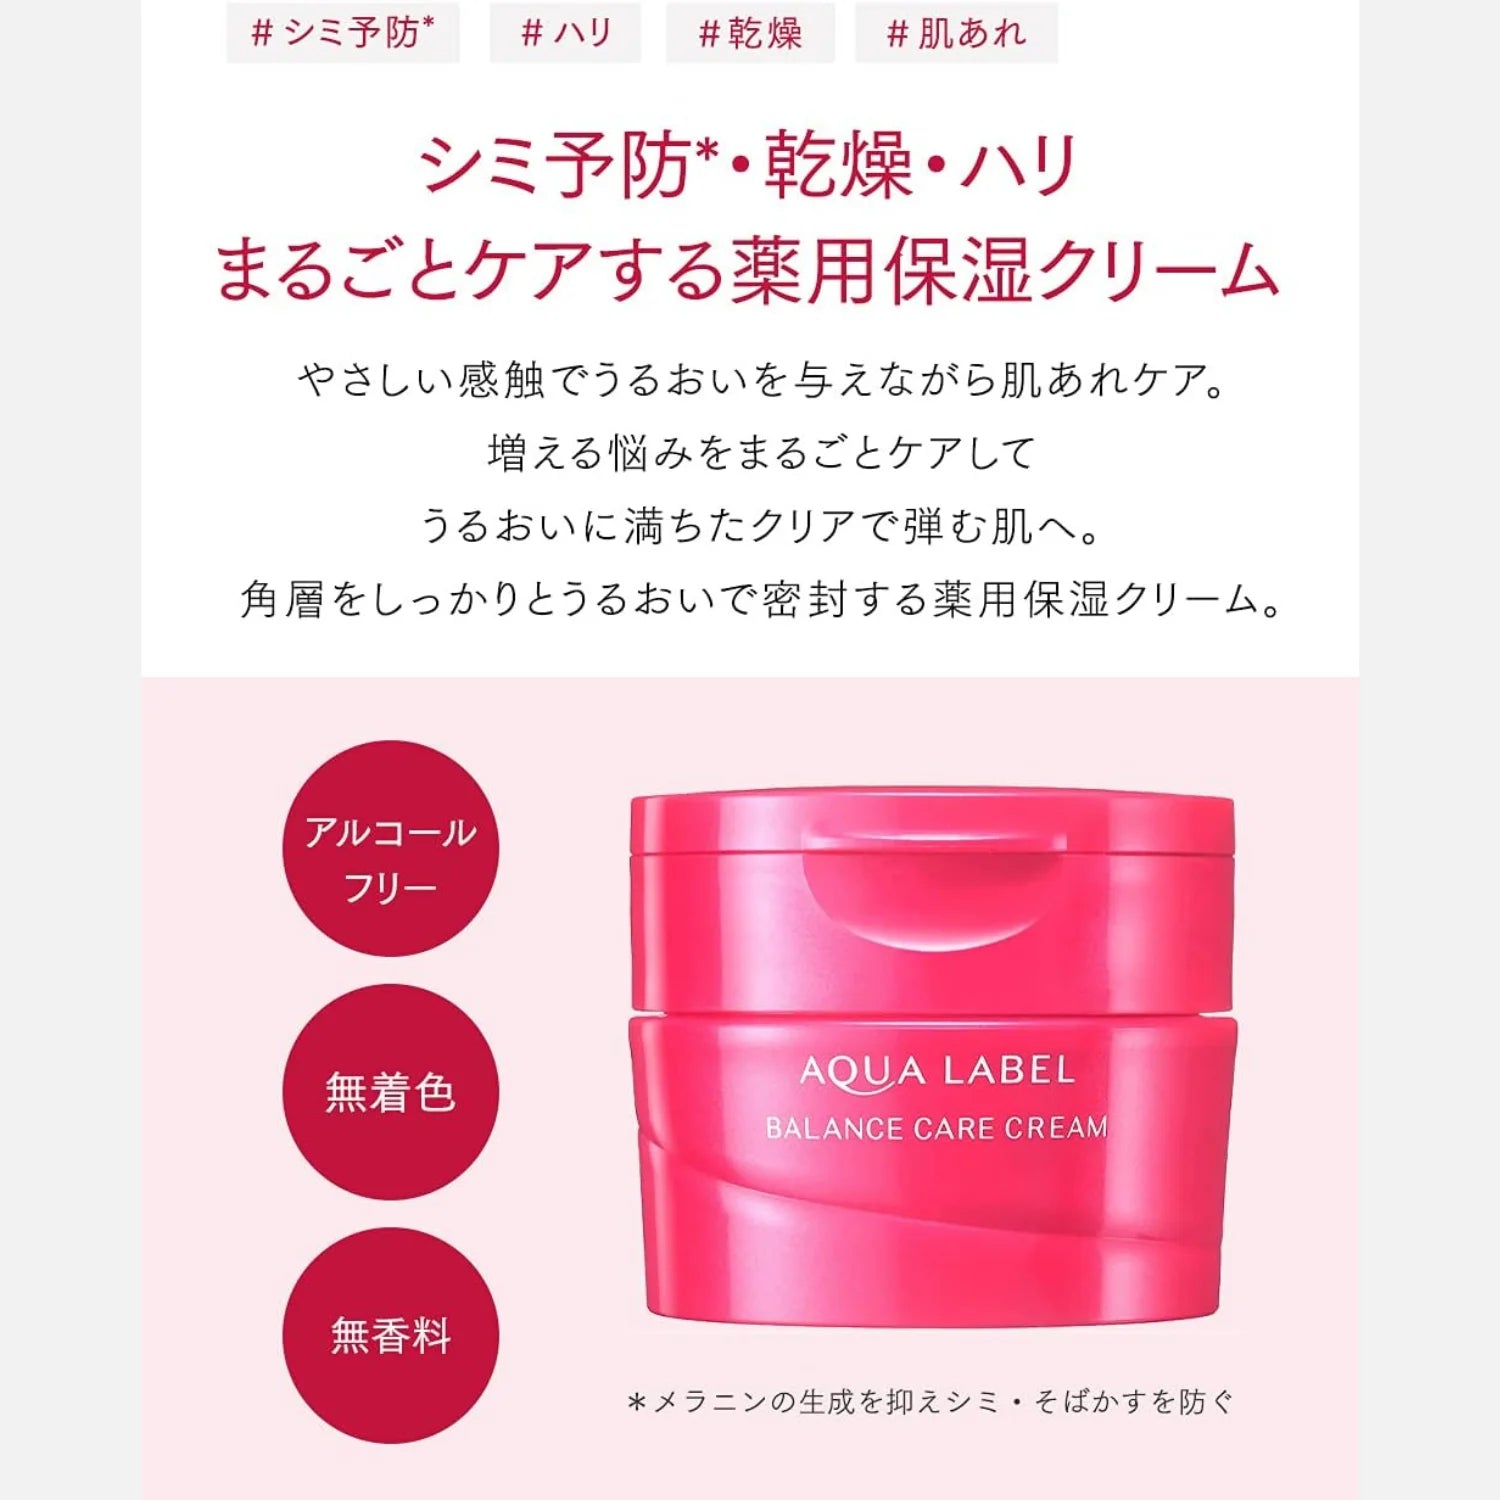 Shiseido AQUALABEL Balance Care Cream 50g - Buy Me Japan